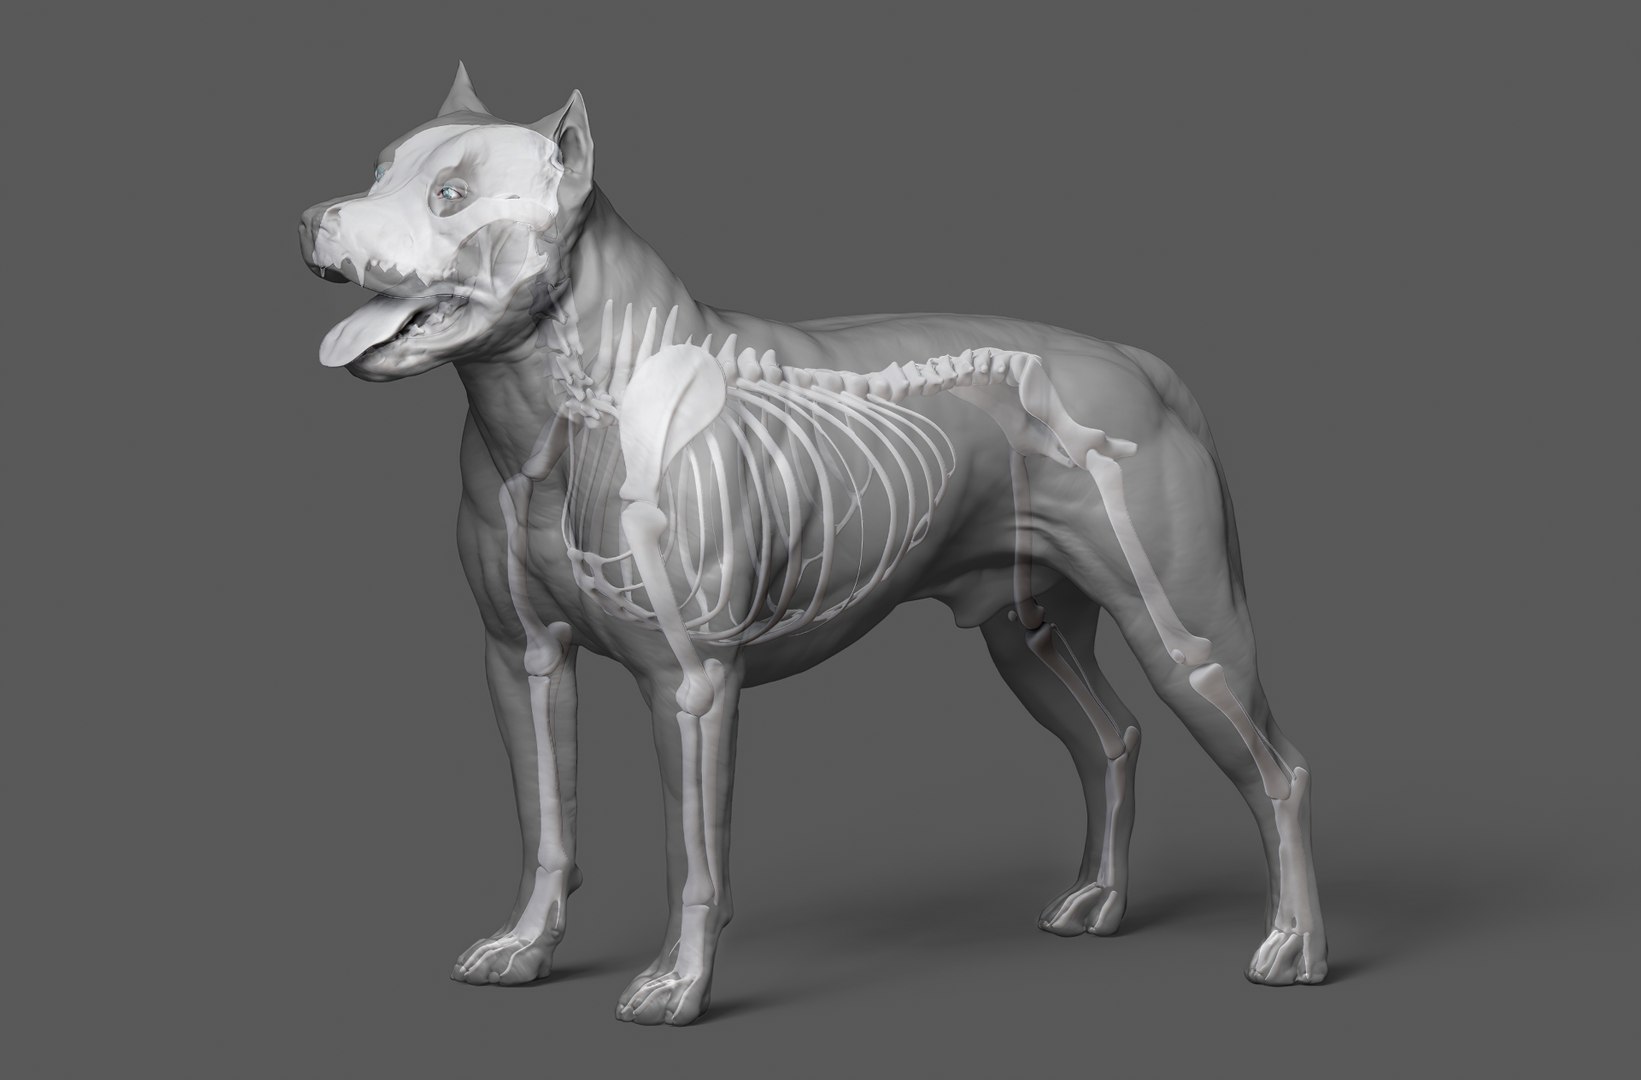 3D model Rigged Dog Skeleton - TurboSquid 1836183